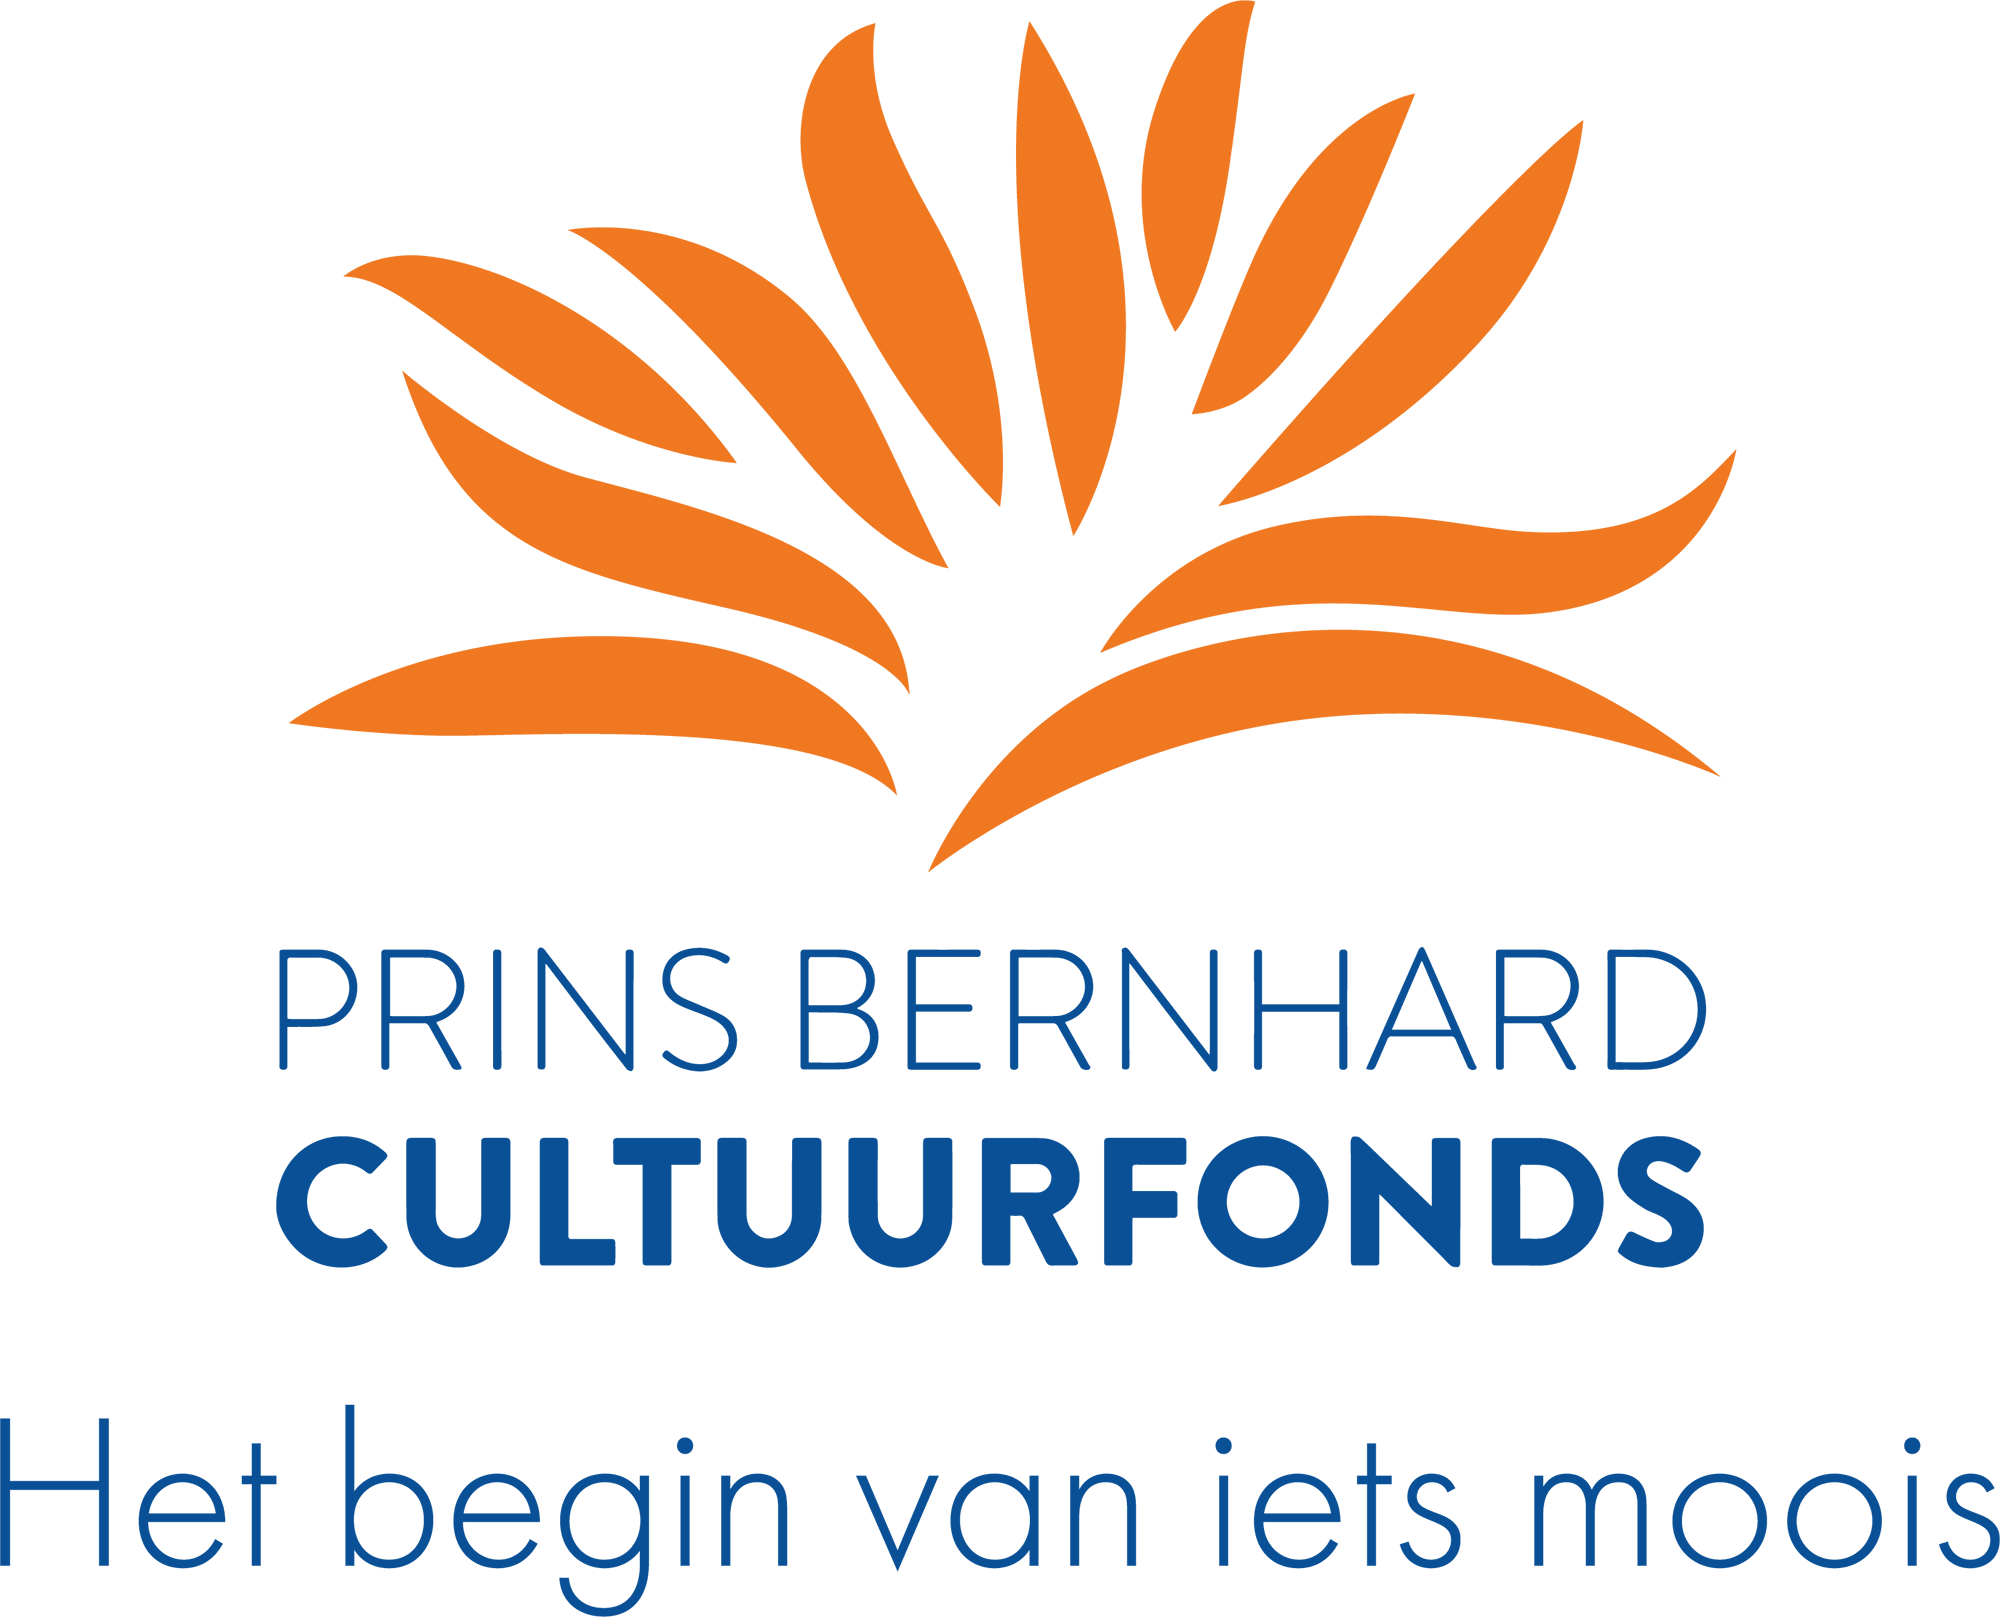 Logo Prins Bernhard cultuurfonds